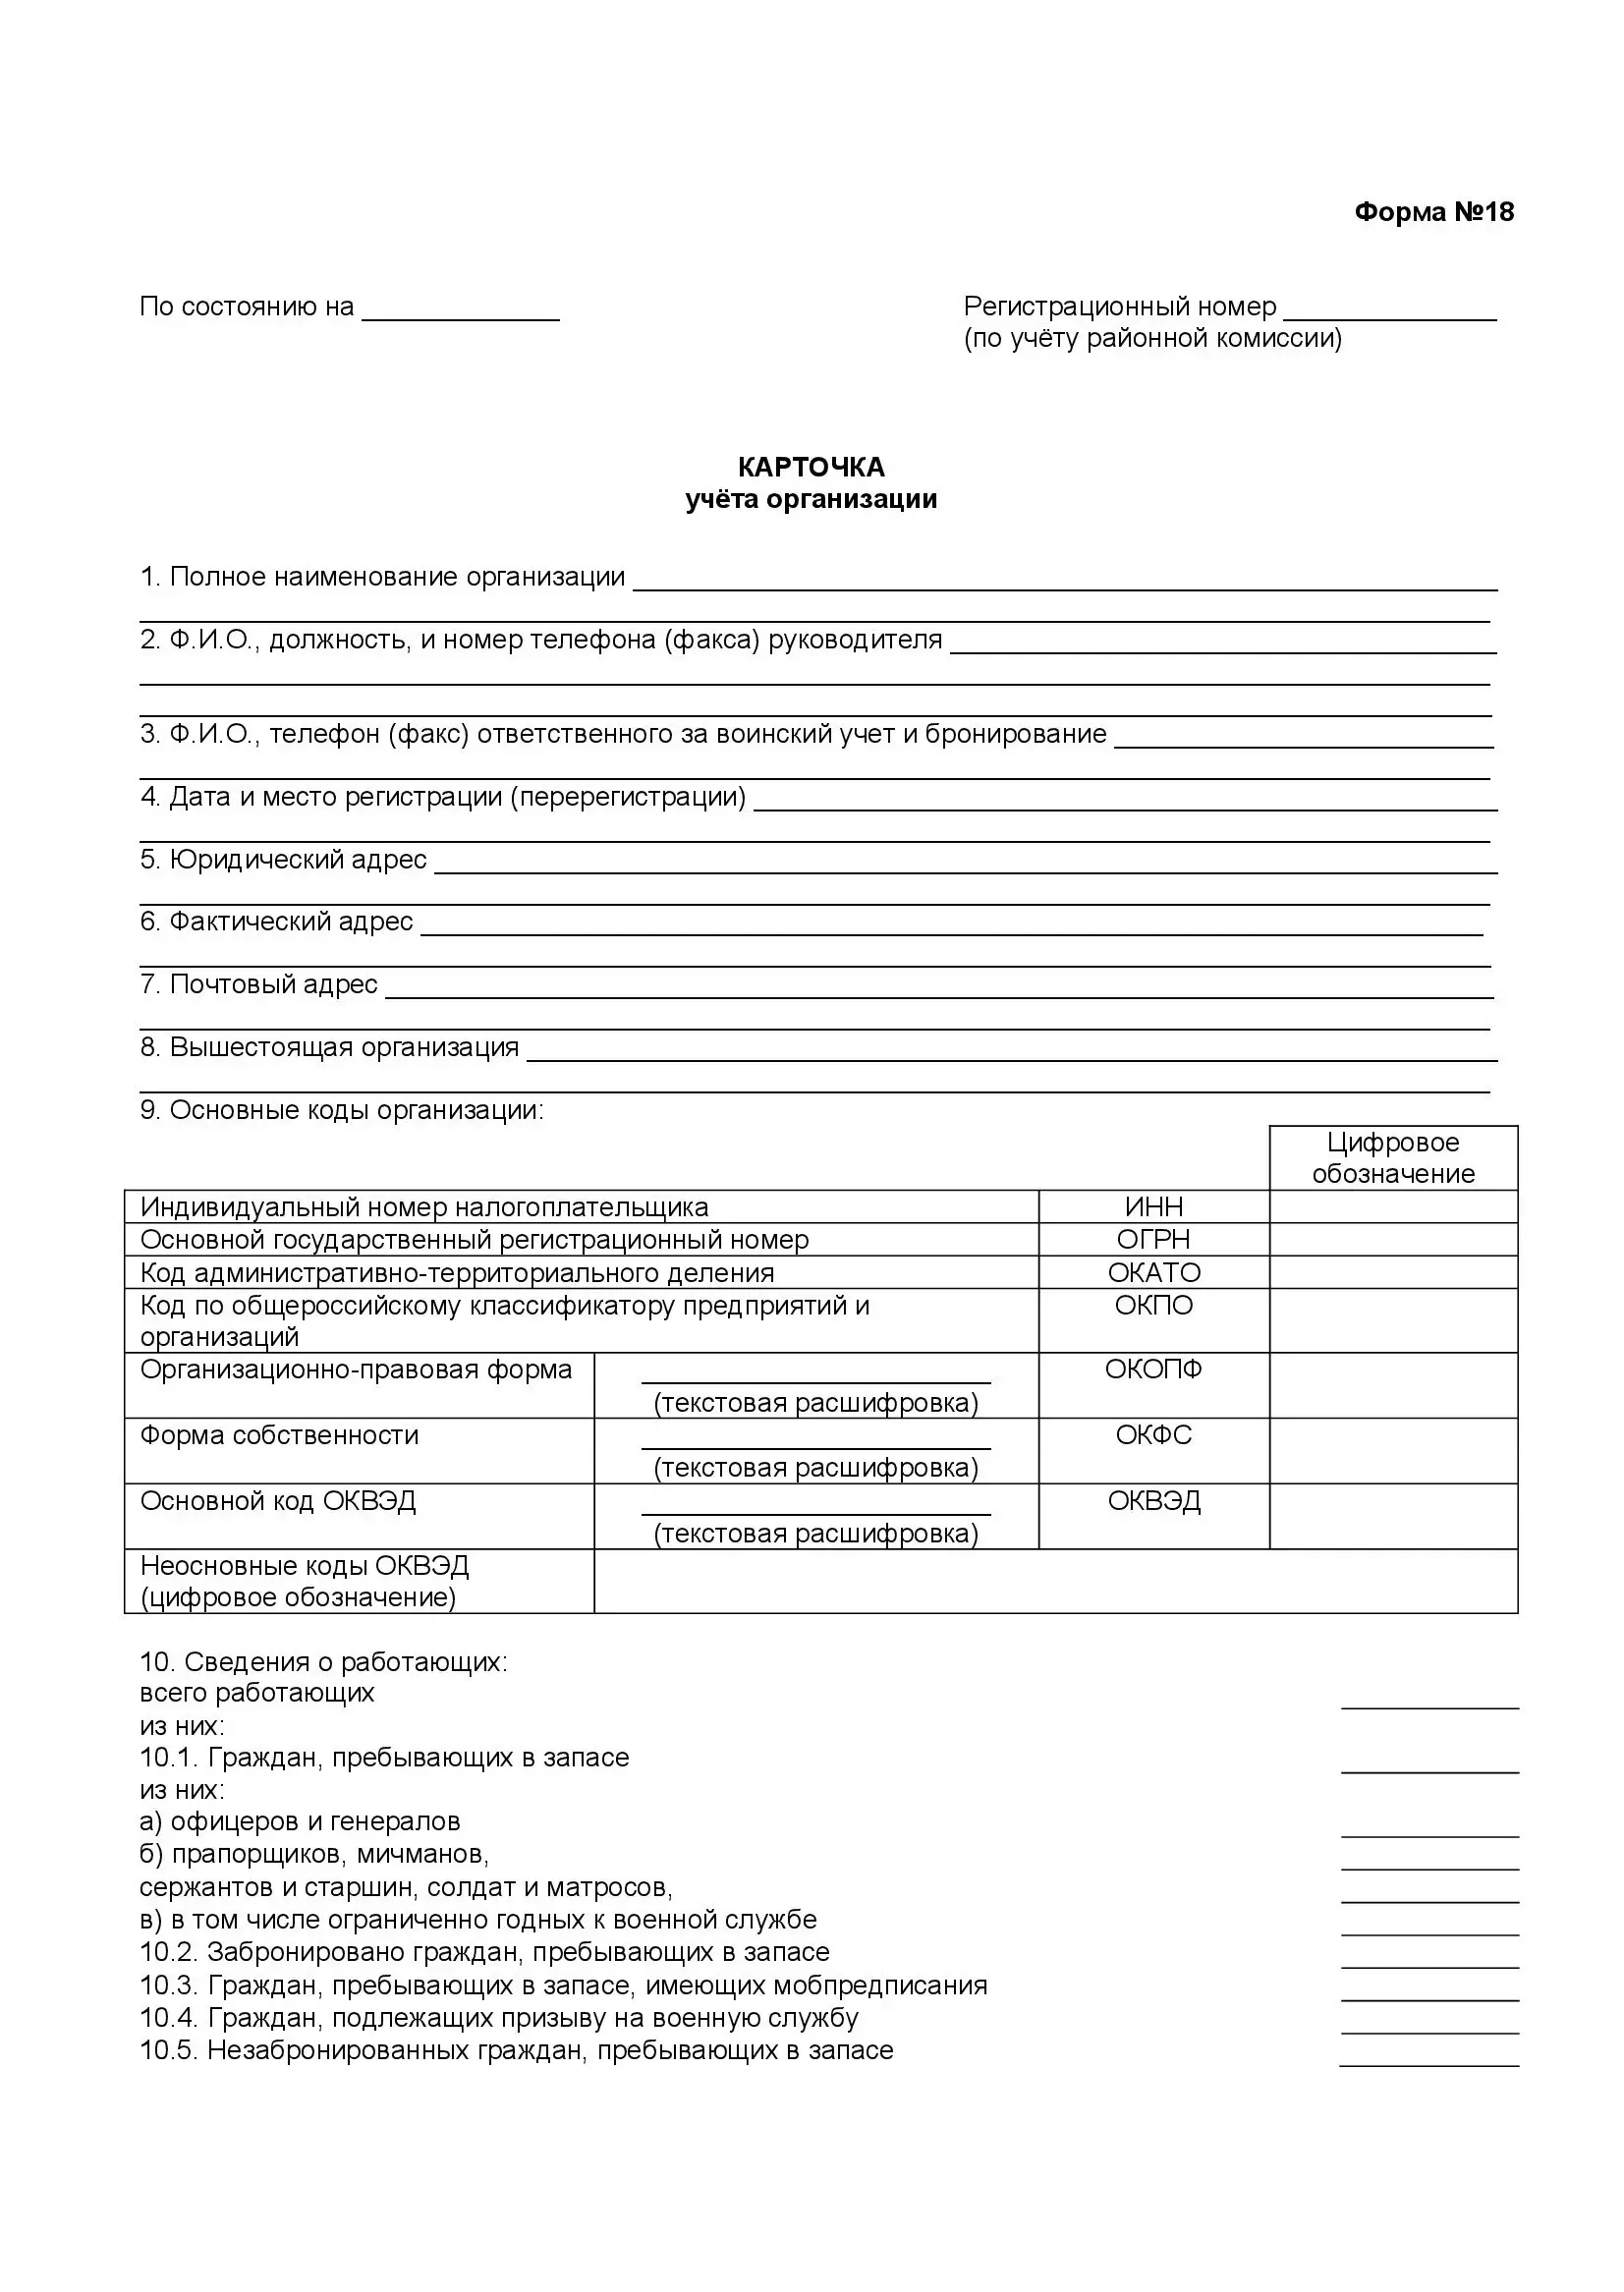 Изображение документа: Карточка учёта организации (форма 18)